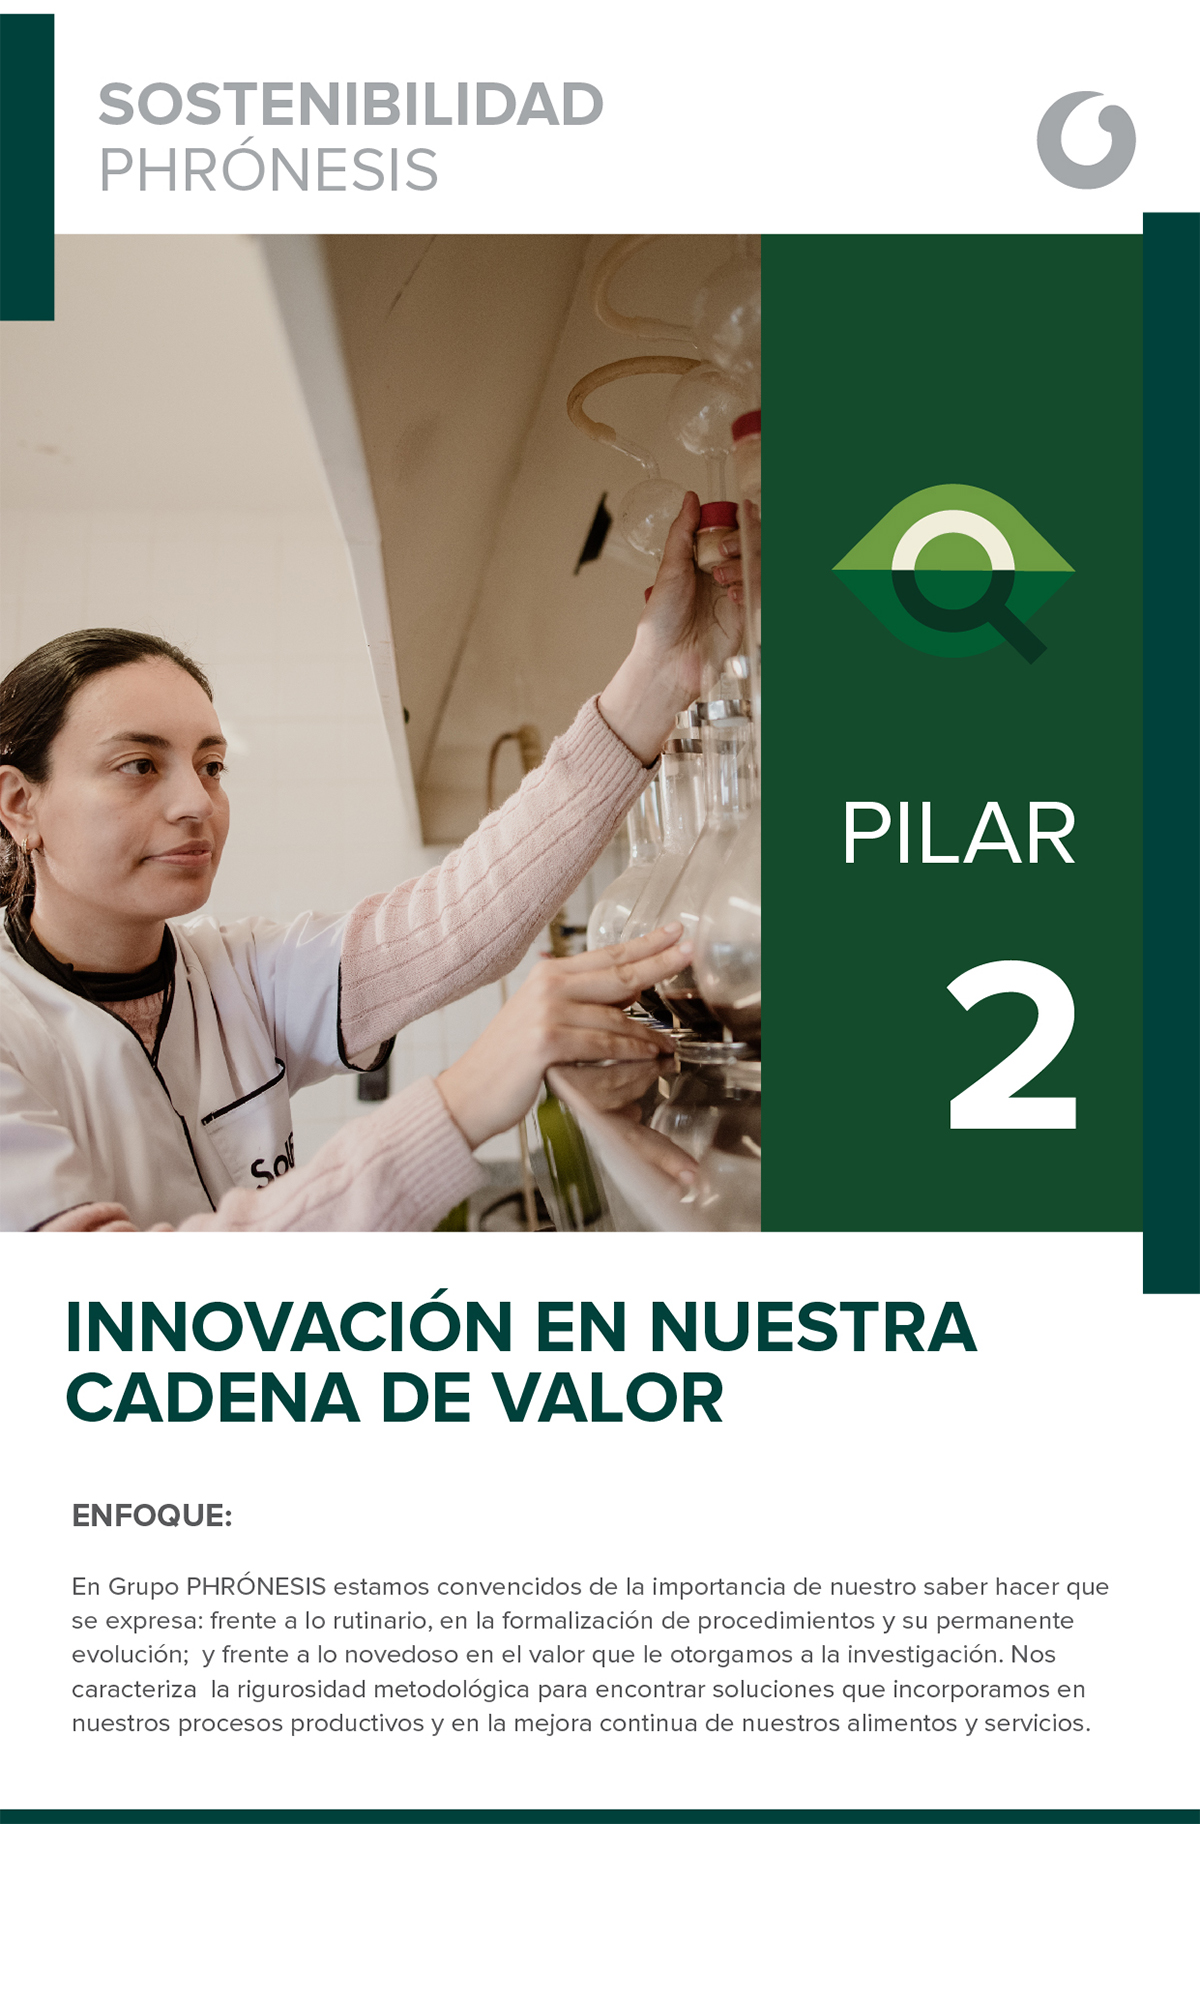 Pilar 2